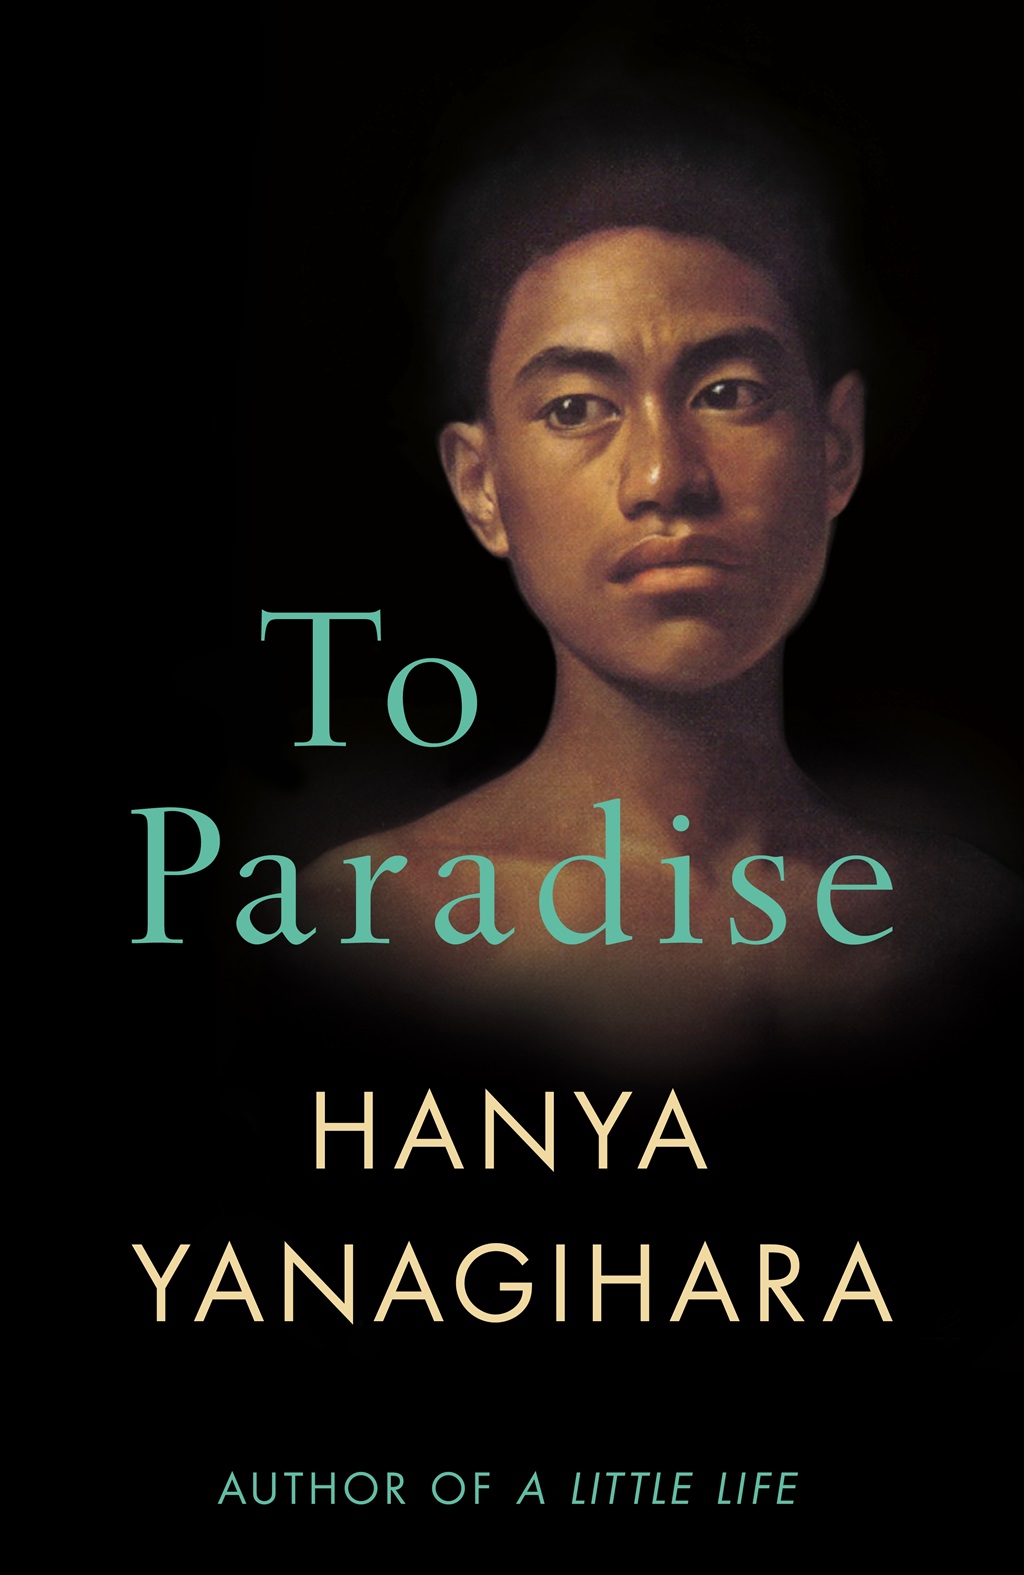 To Paradise by Hanya Yanagihara (Picador).